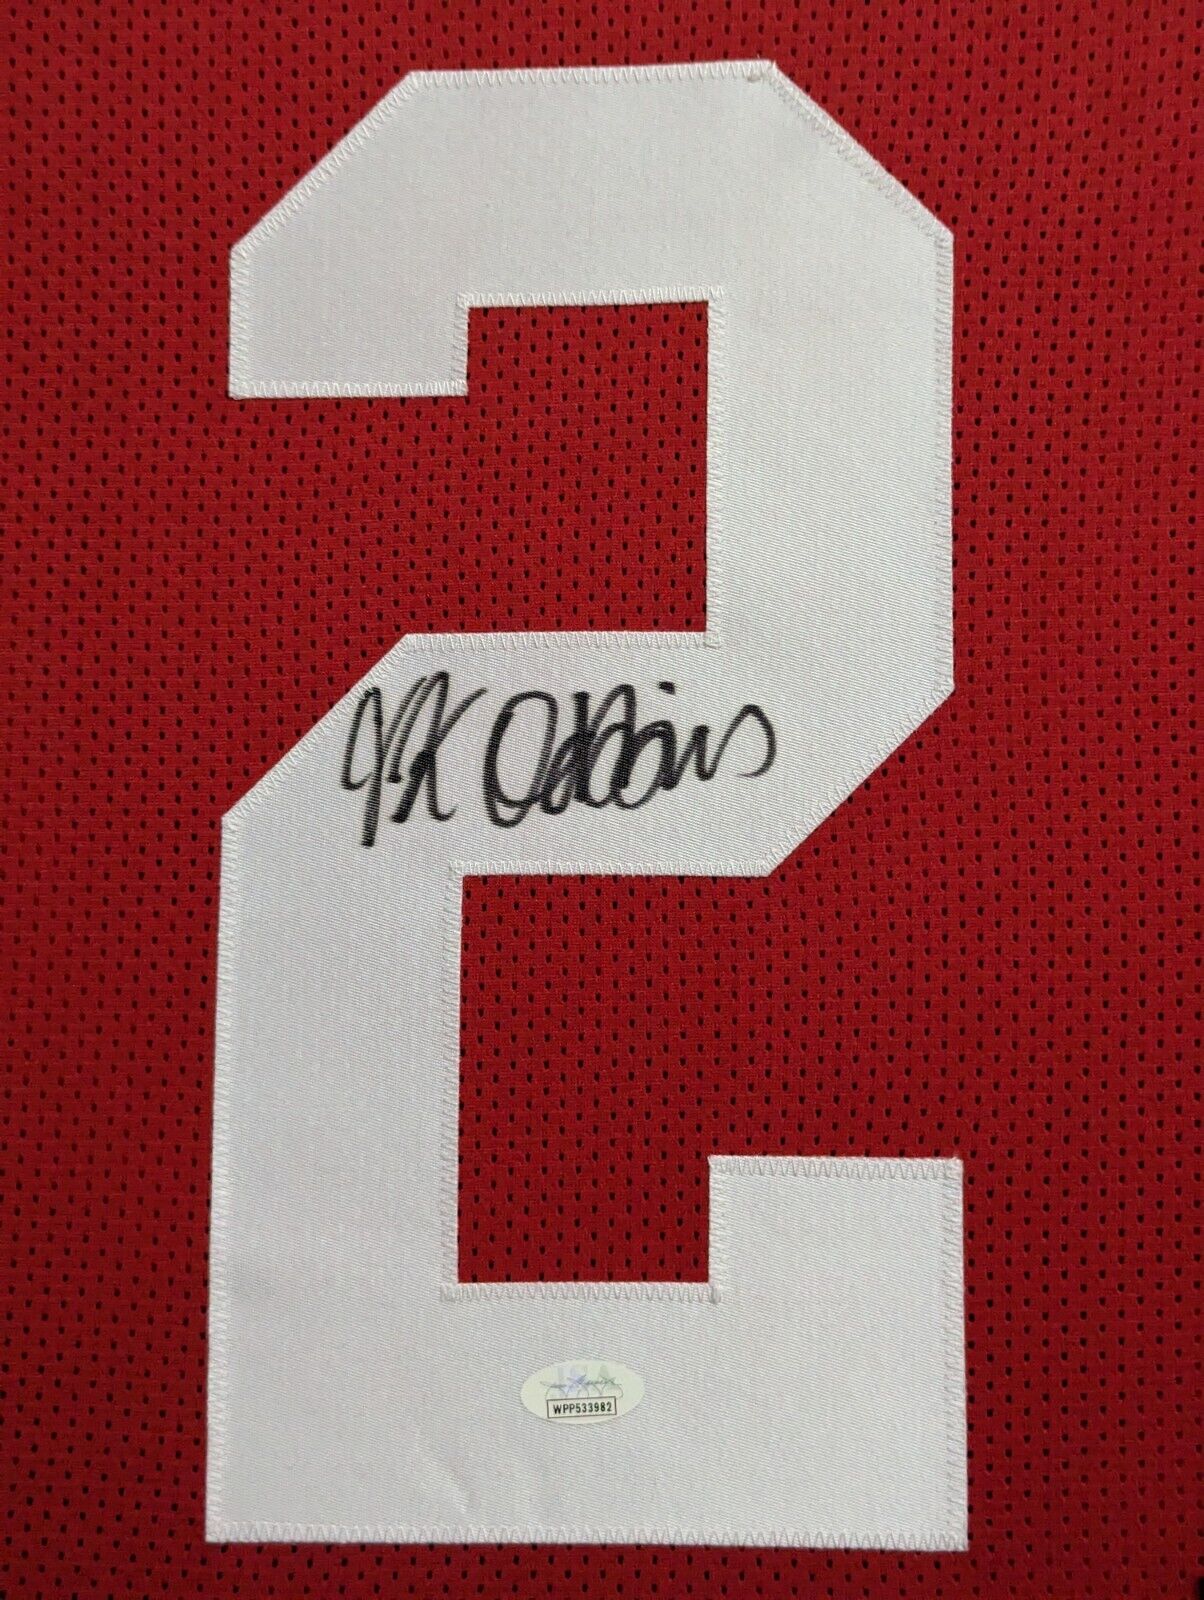 MVP Authentics Framed Ohio State Buckeyes Jk Dobbins Autographed Signed Jersey Jsa Coa 540 sports jersey framing , jersey framing